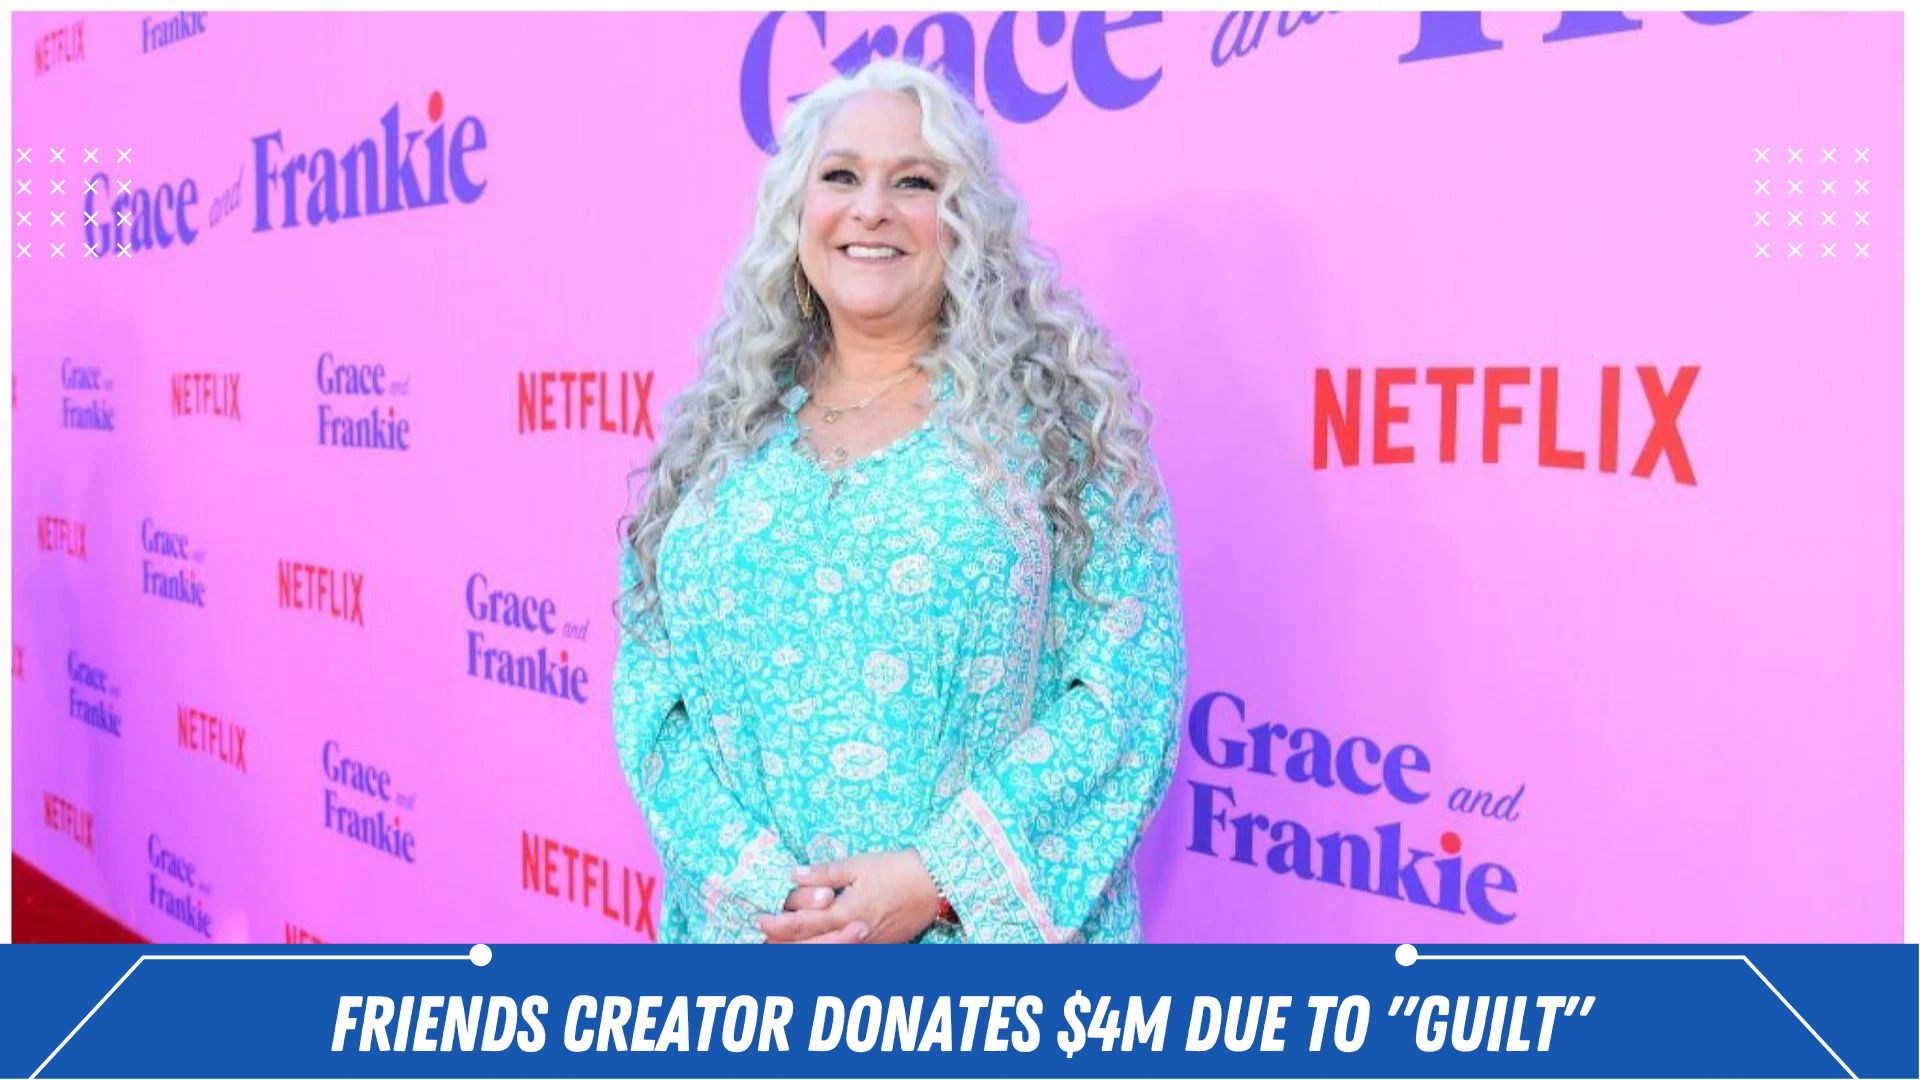 Friends creator donates $4M due to guilt